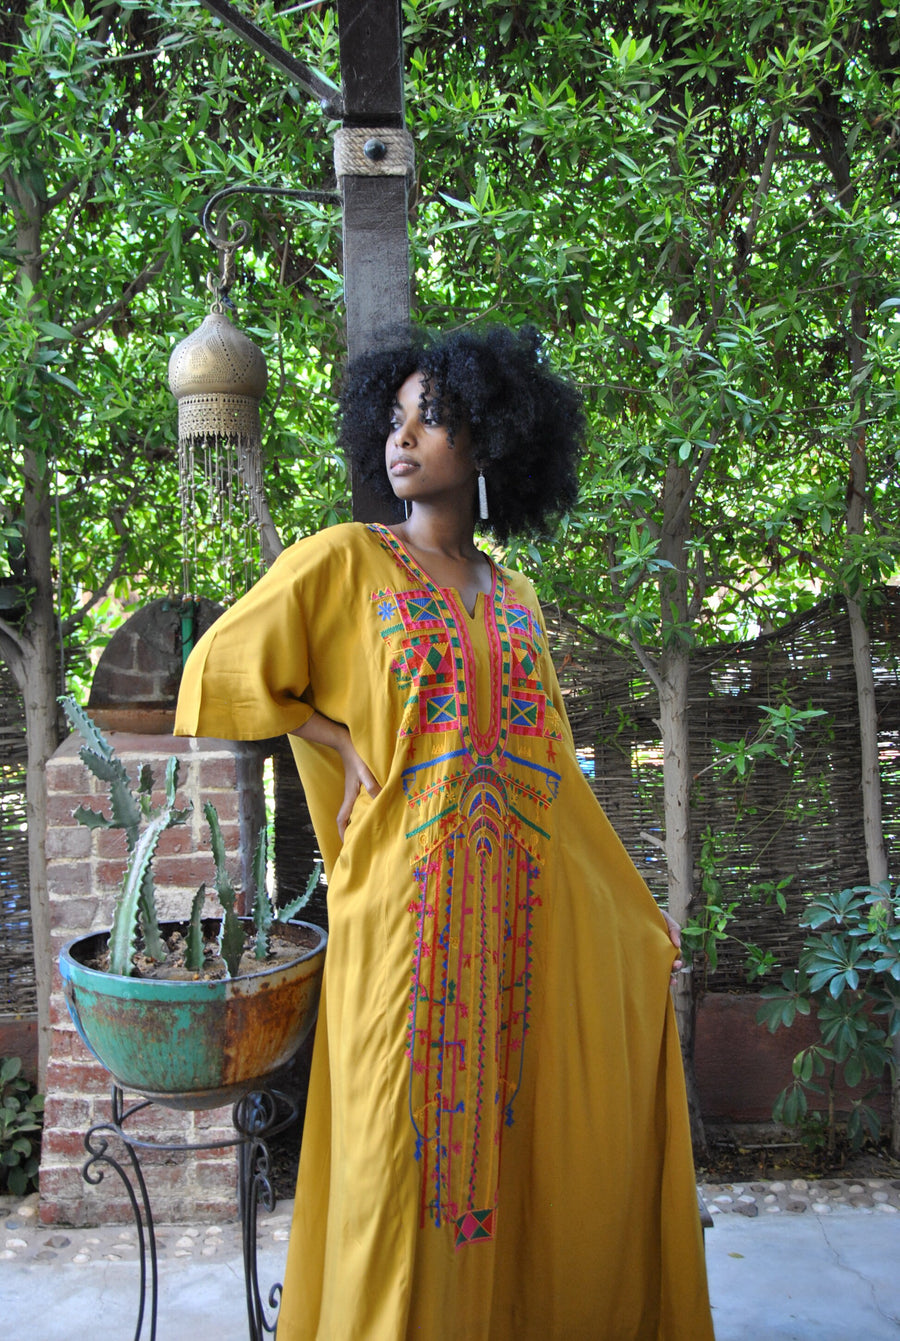 Mustard yellow Siwa embroidered Kaftan dress, Cotton Kaftan, caftans for women, Summer Kaftan, Embroidered kaftan, caftans, Egyptian